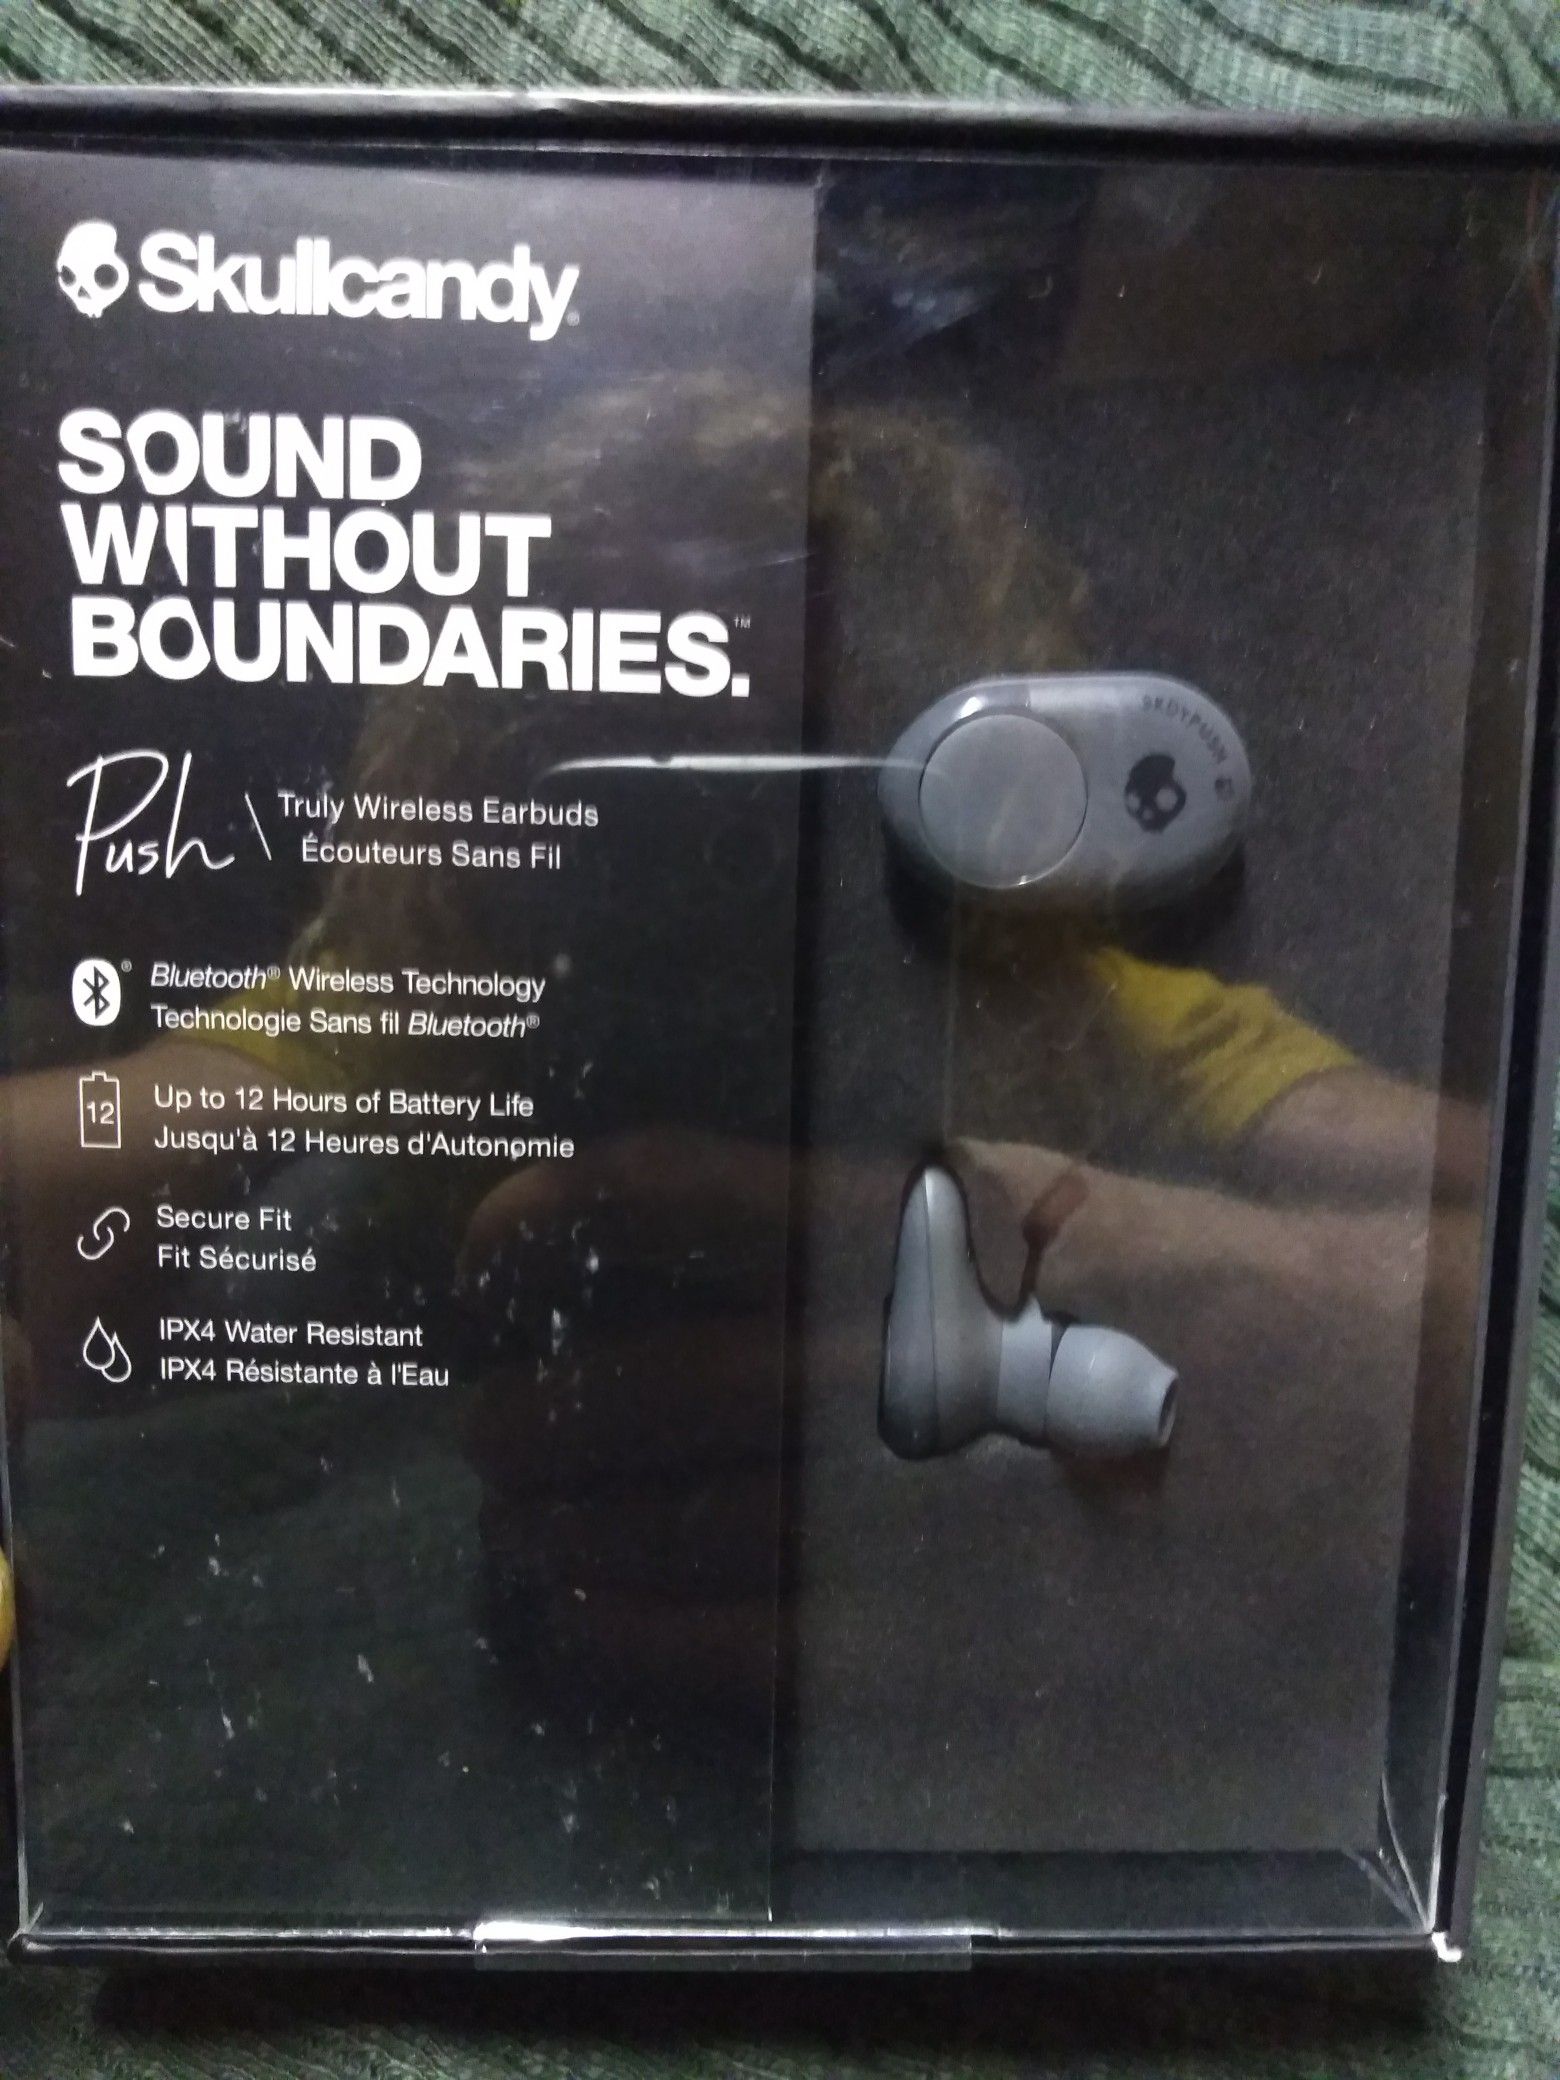 Skullcandy Push Truly Wireless Earbuds